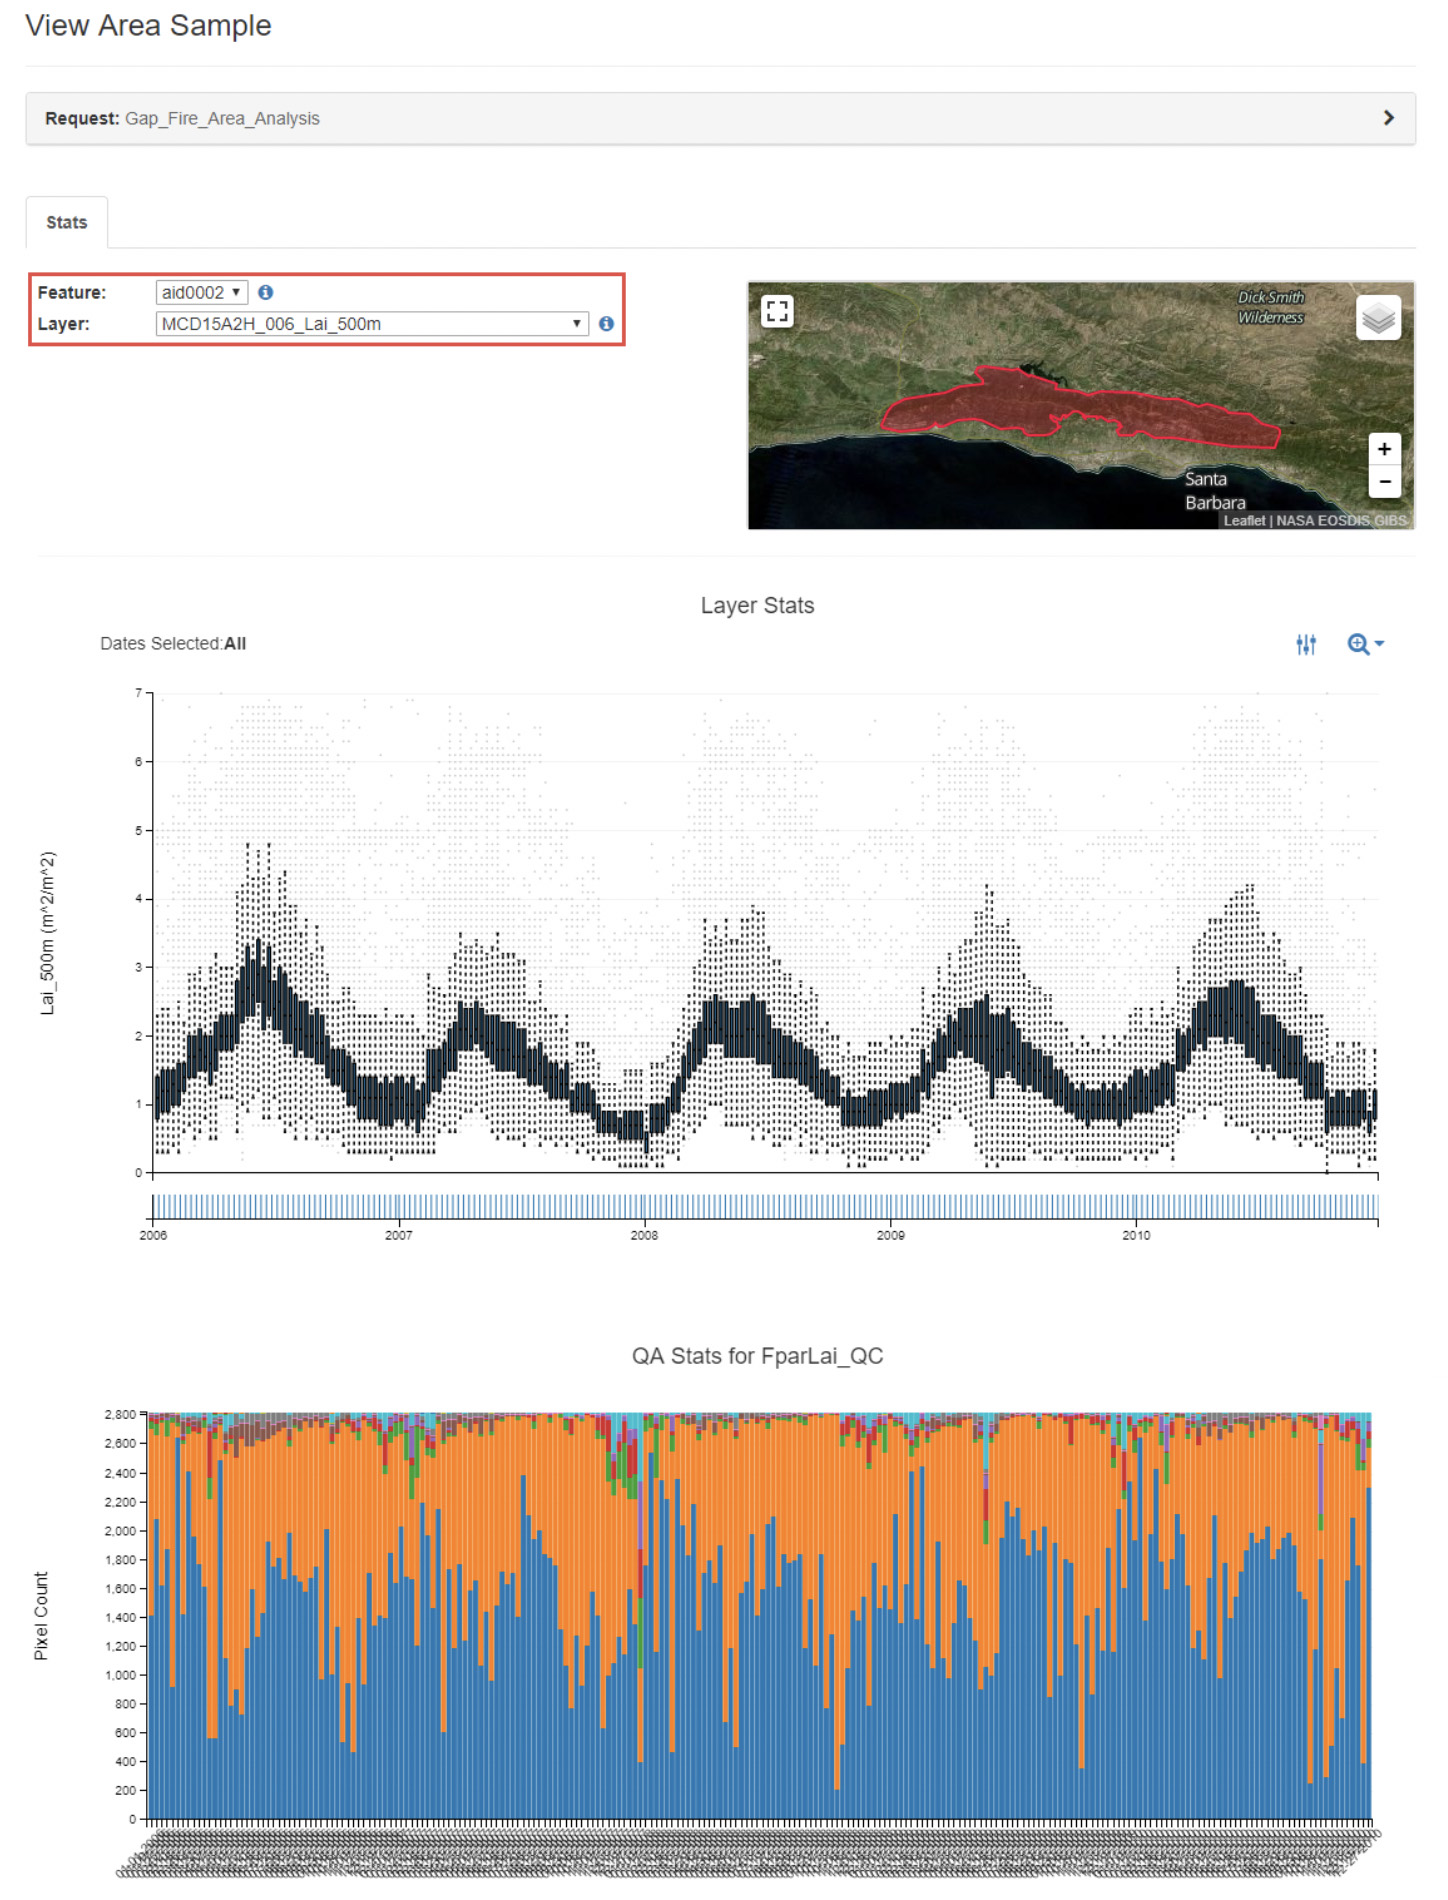 ERDDAP - Maui Citizen Science Coastal Water Quality Data - Make A Graph